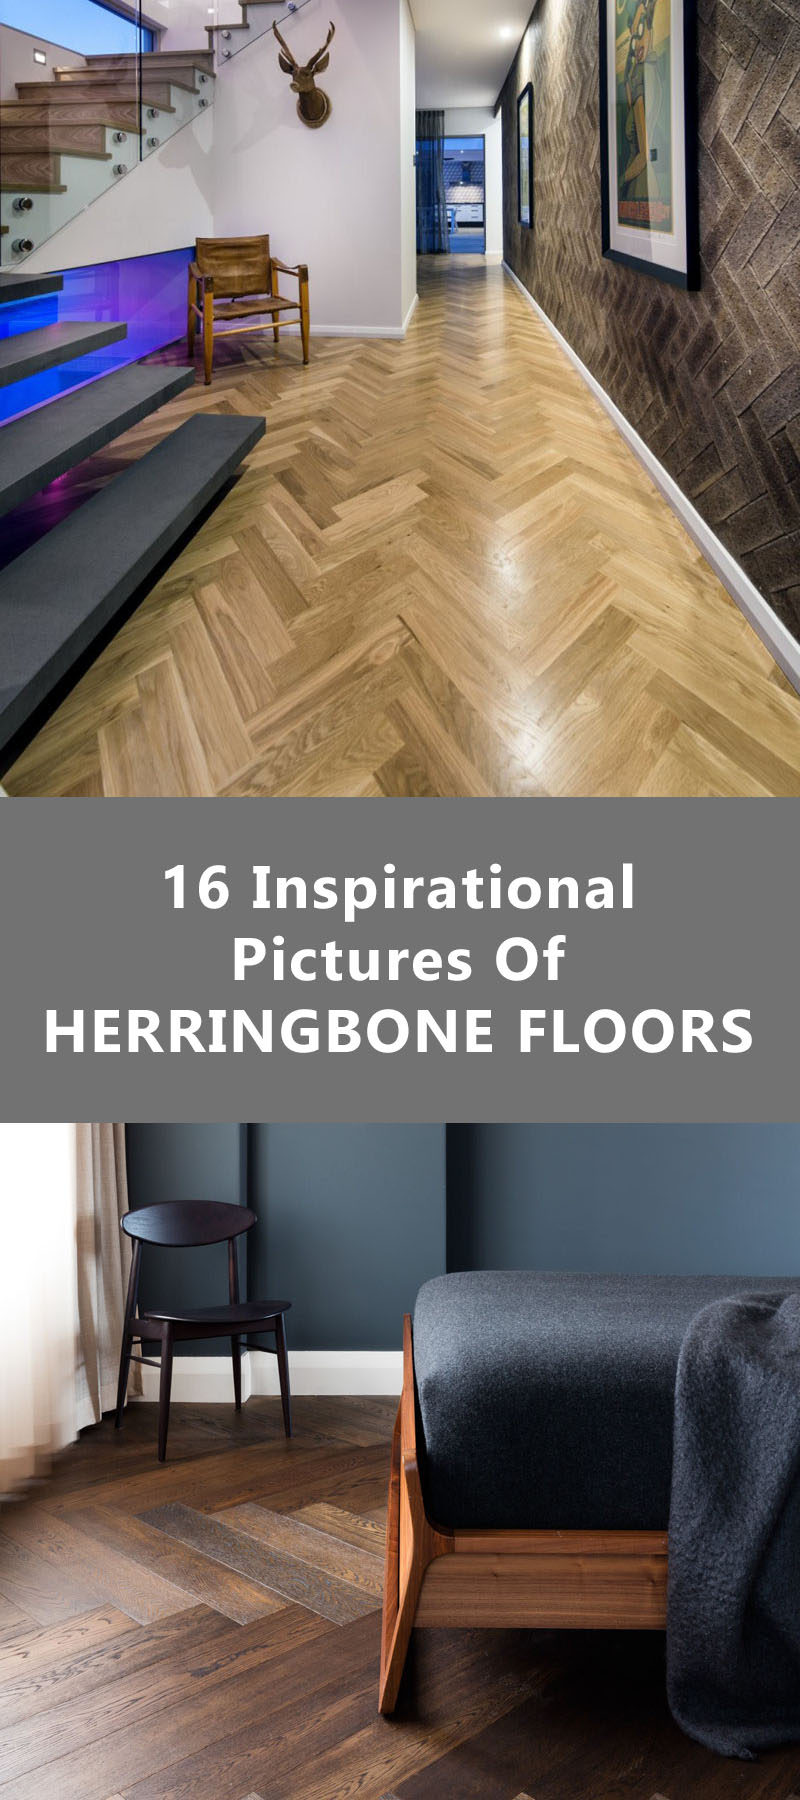 16 Inspirational Pictures Of Herringbone Floors